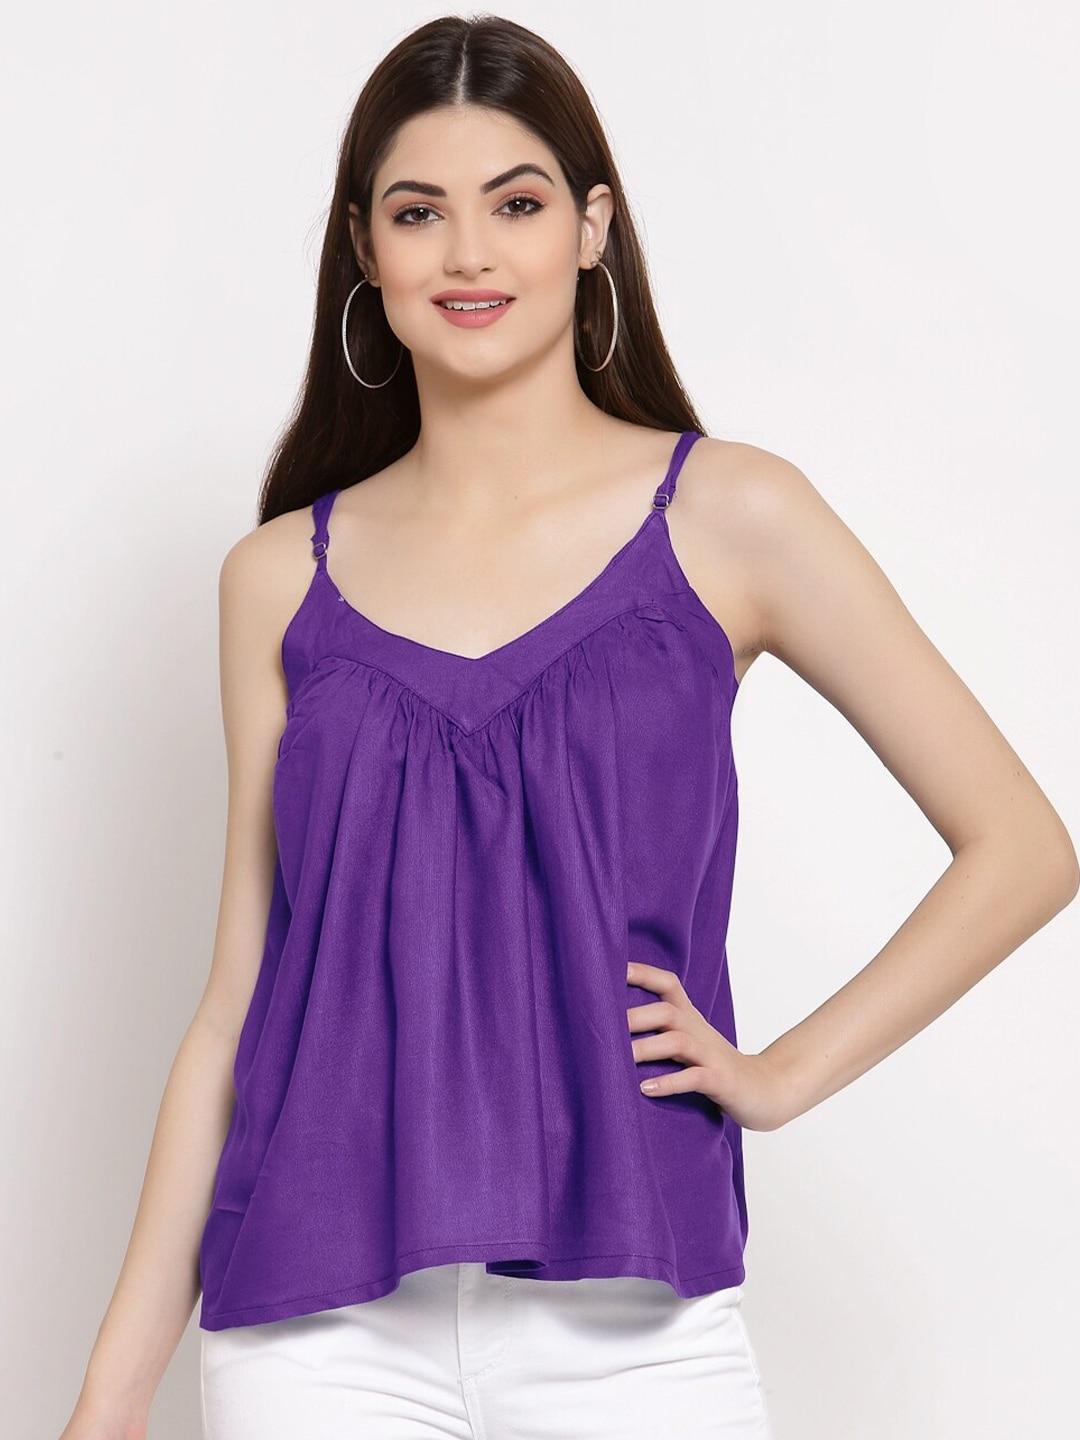 patrorna-women-purple-top